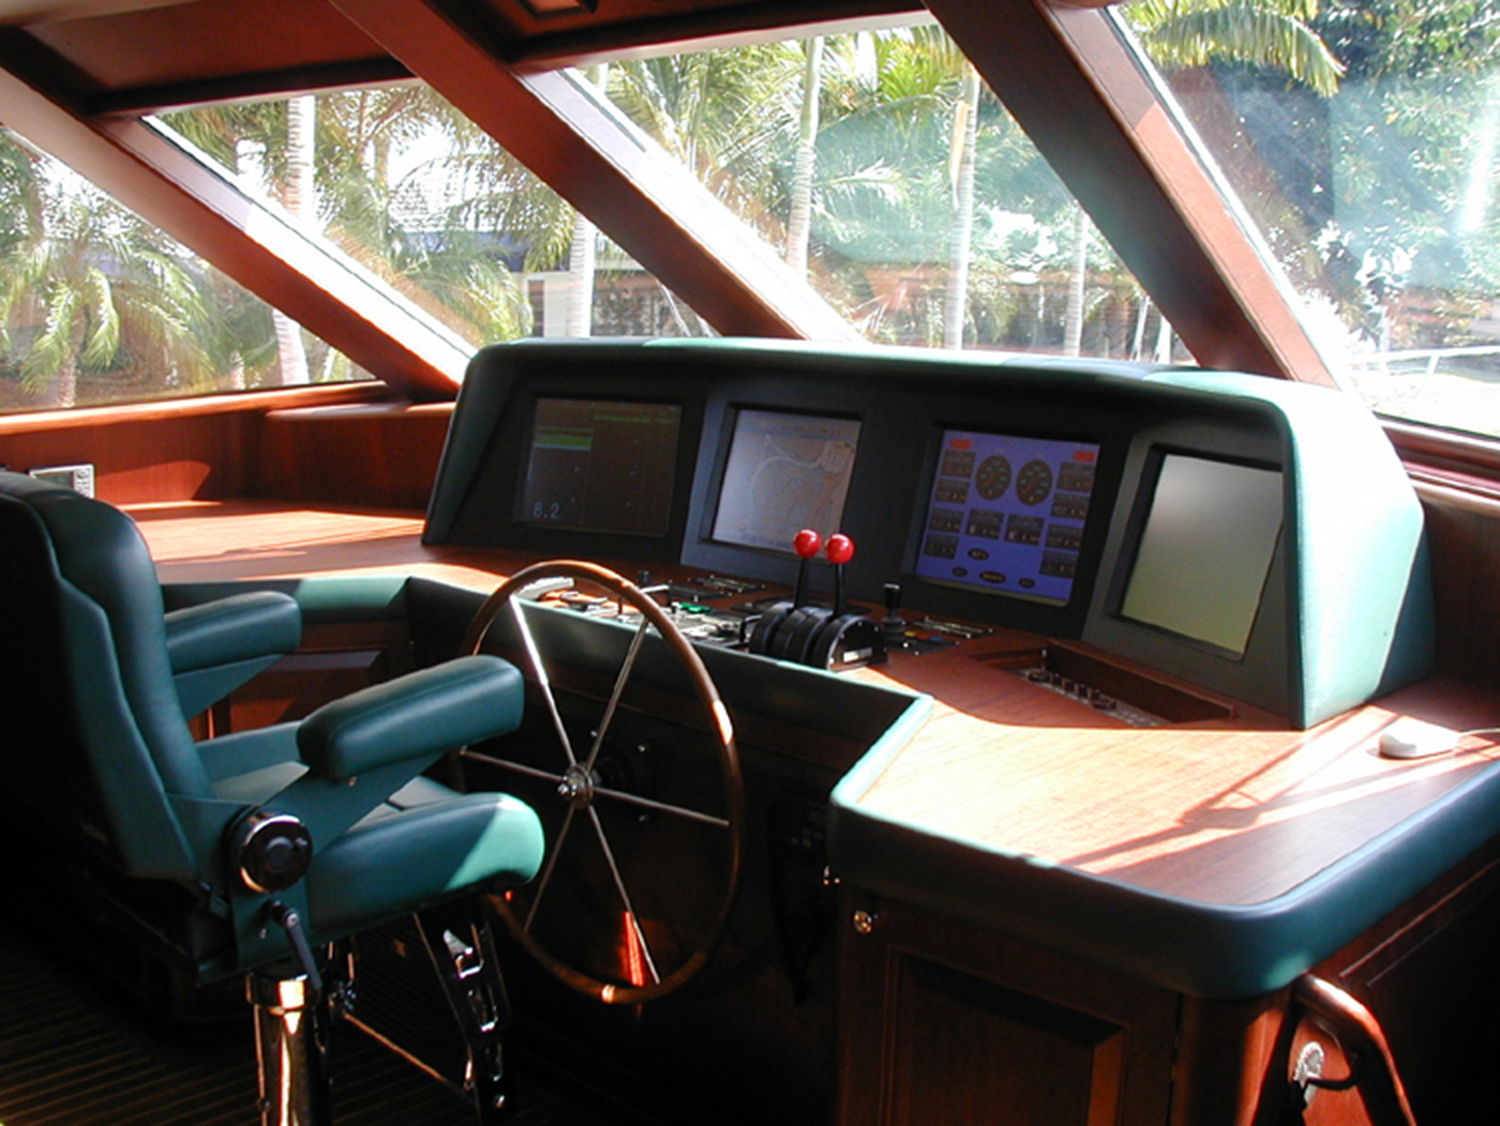 Ray Hunt Design 102' Motor Yacht